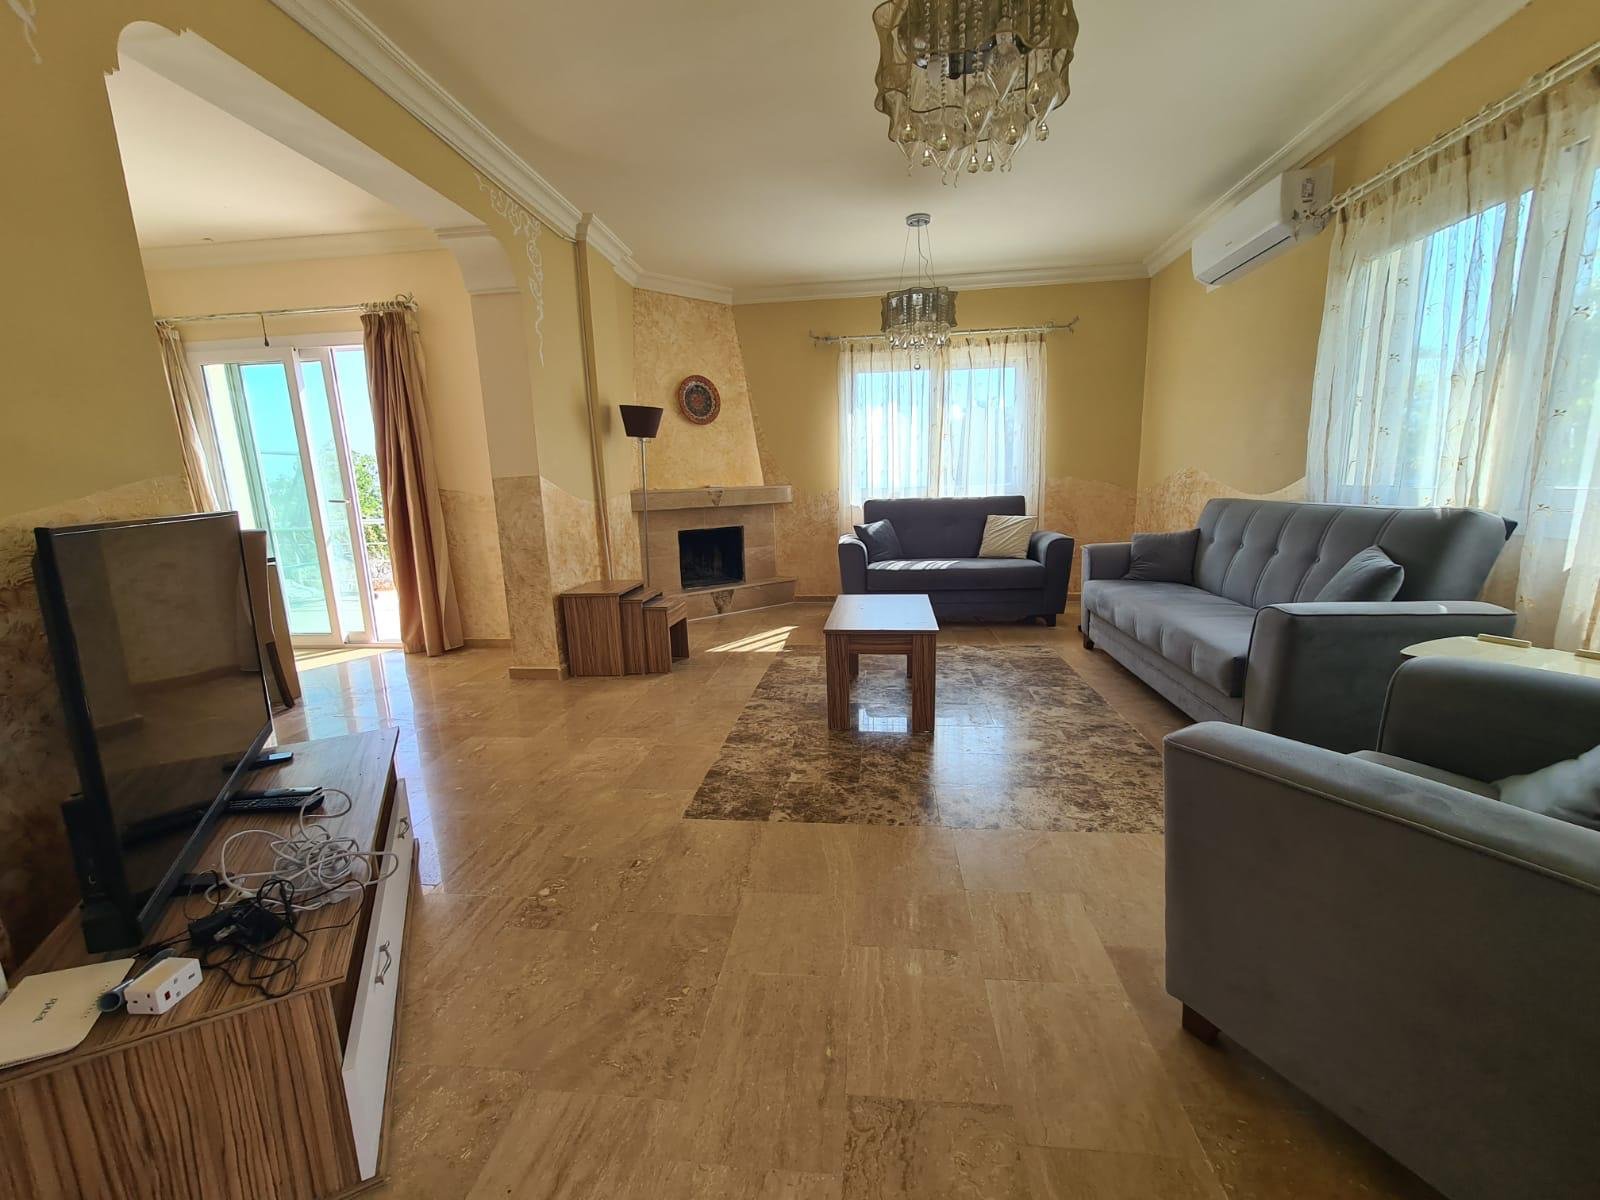 3 bedroom villa for sale in Kyrenia, Karshiyaka-13d82e71-c4fc-4304-9f25-02d237ca90d7